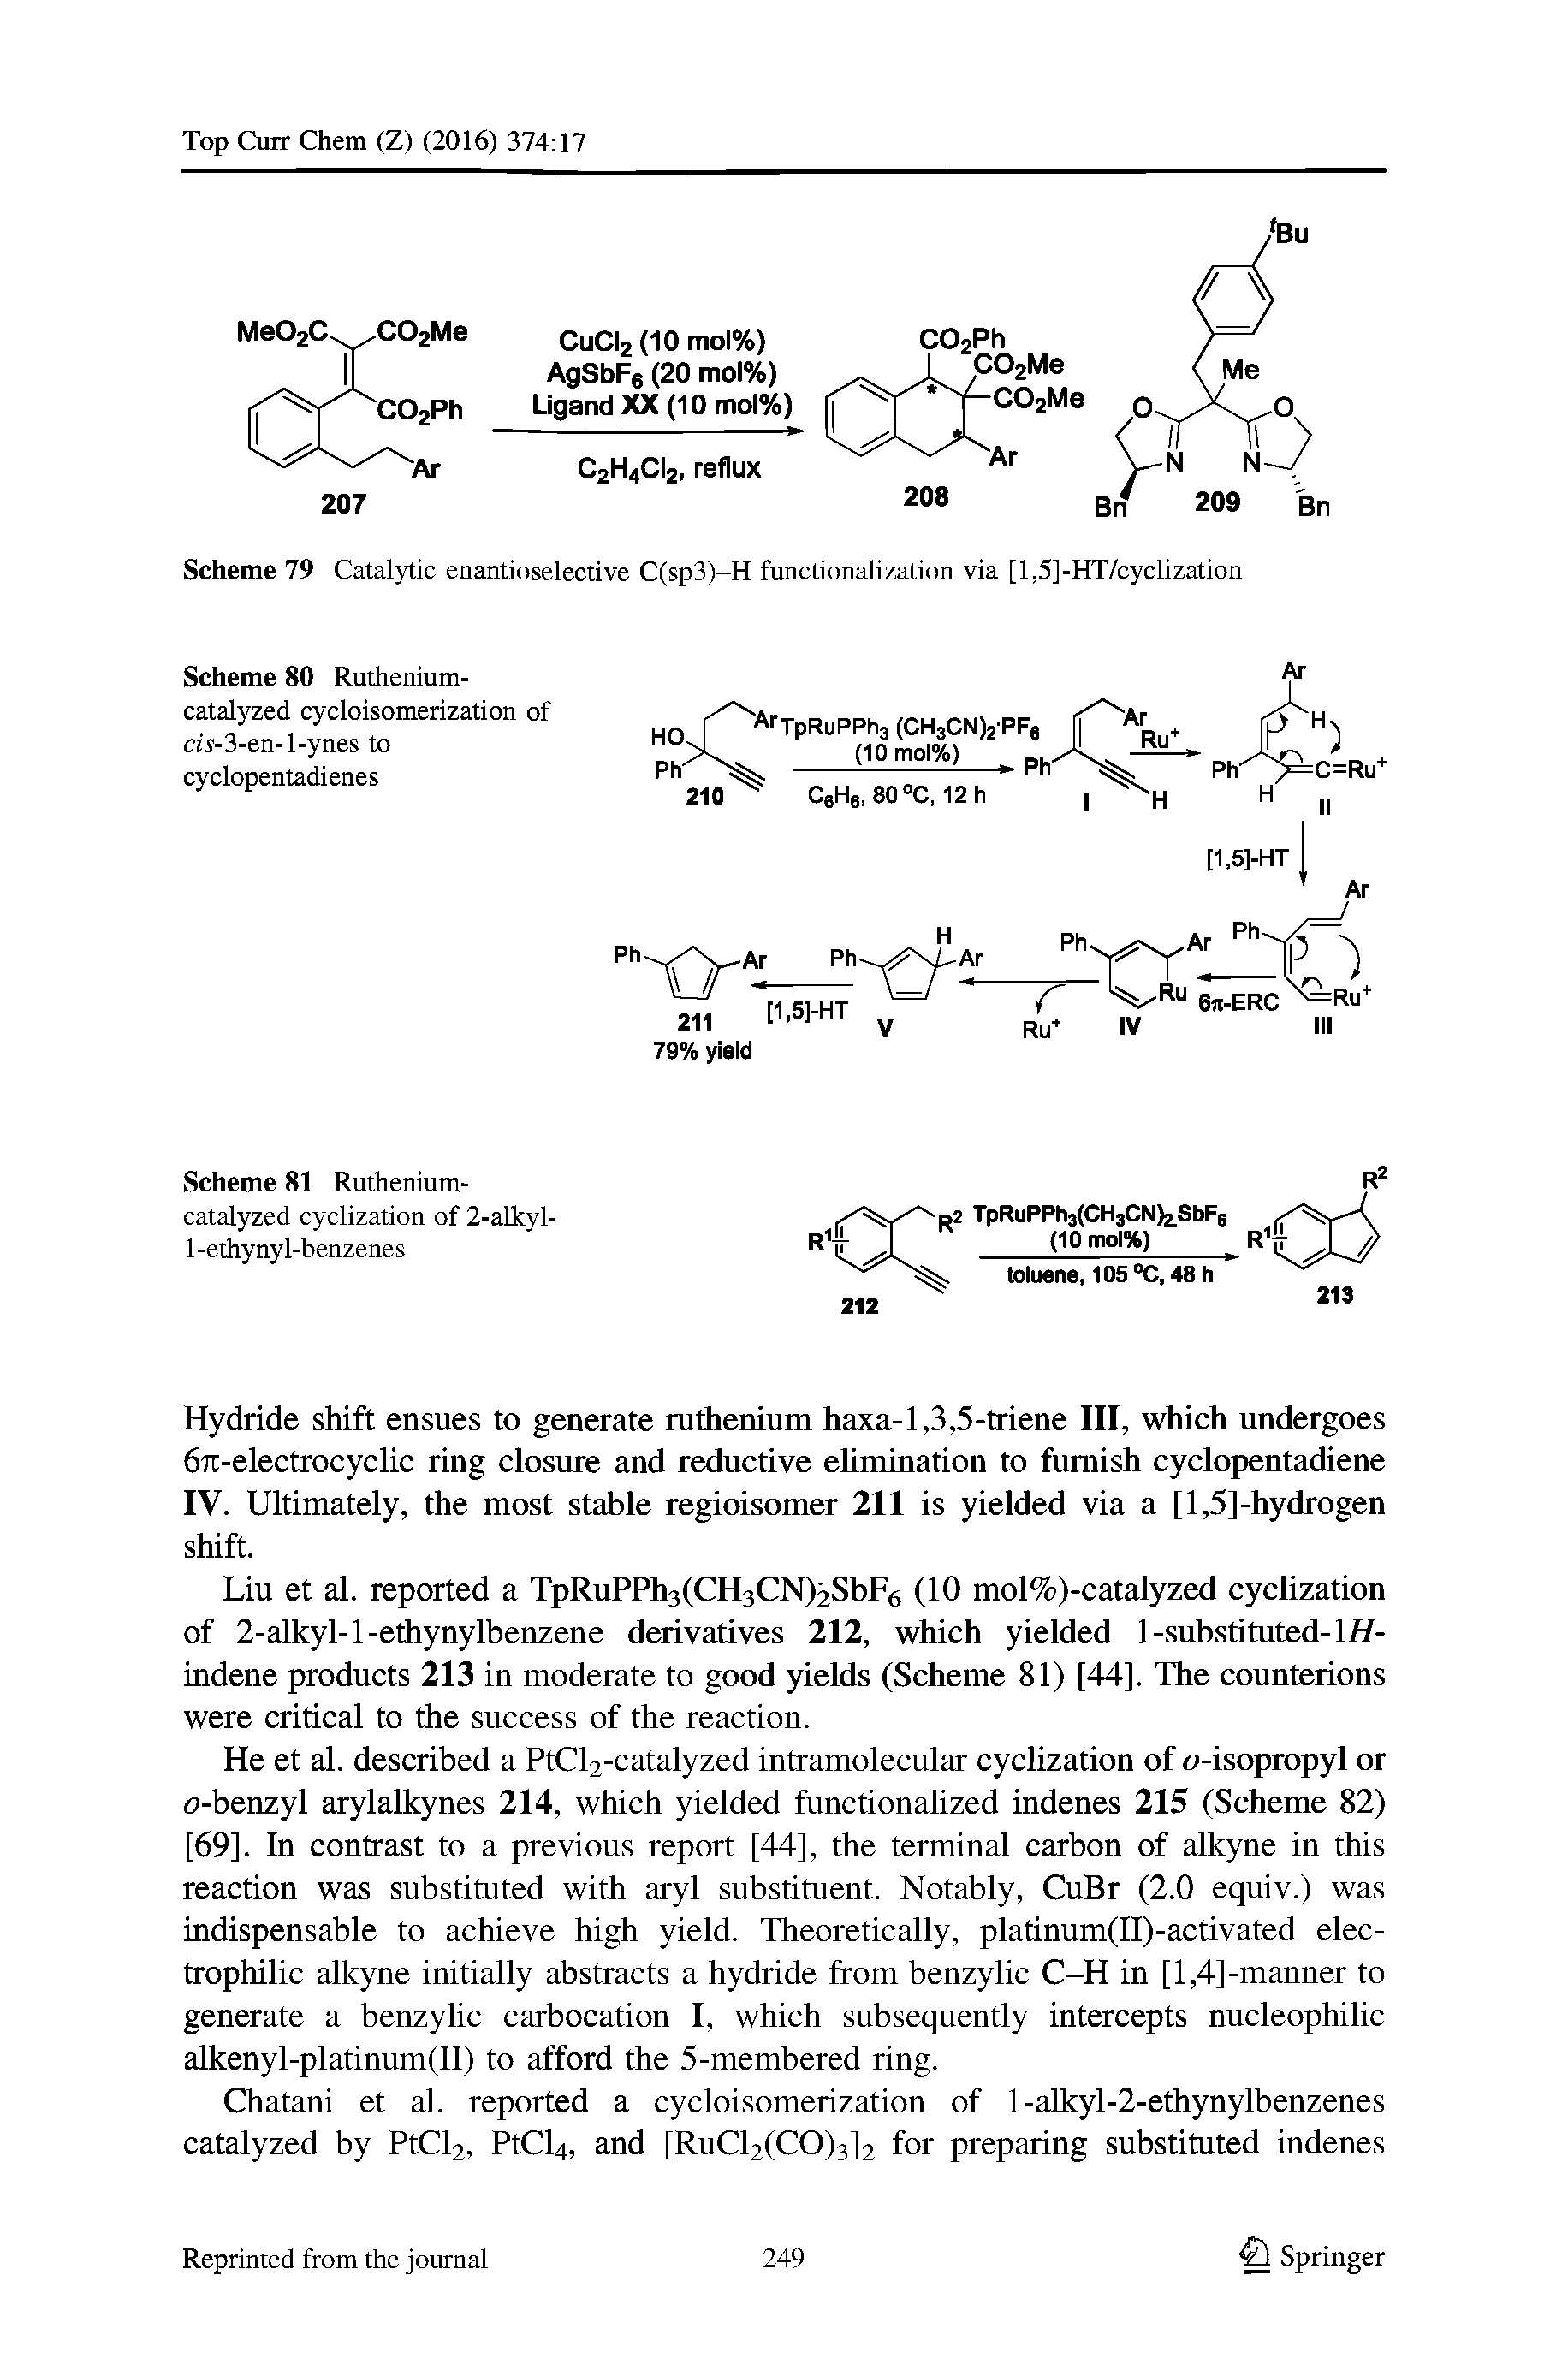 Scheme 81 Ruthenium-catalyzed cyclization of 2-alkyl-1-ethynyl-benzenes...